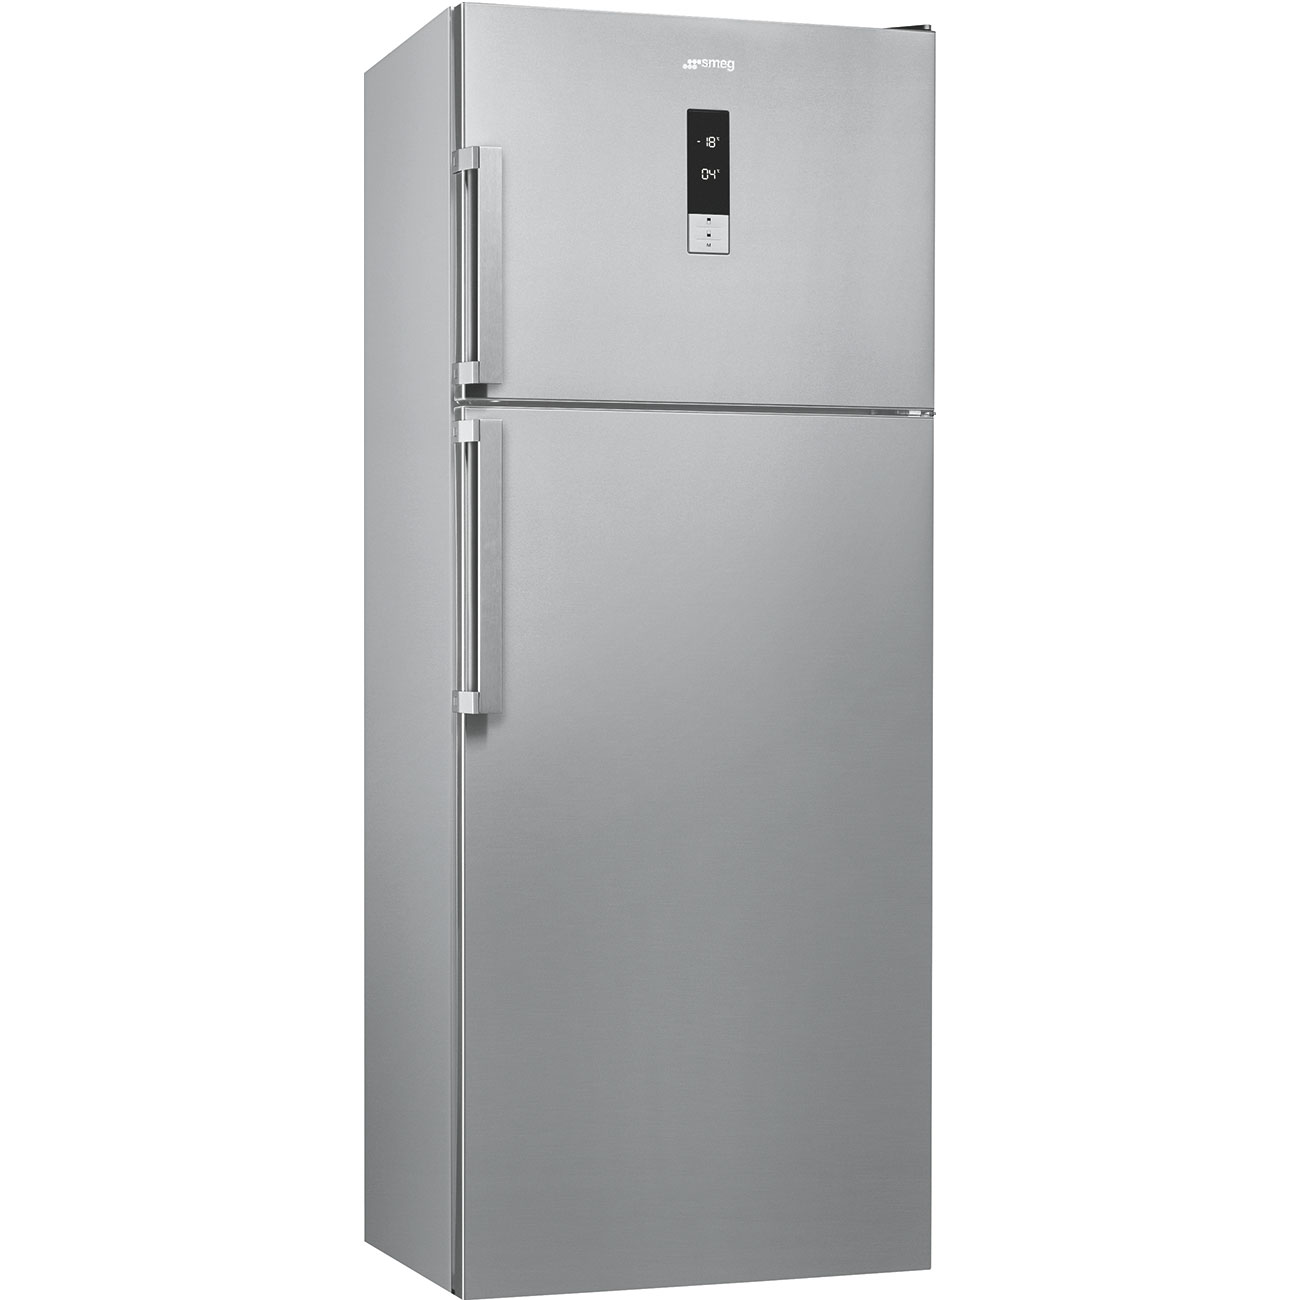 Top Mount Free standing refrigerator - Smeg_1